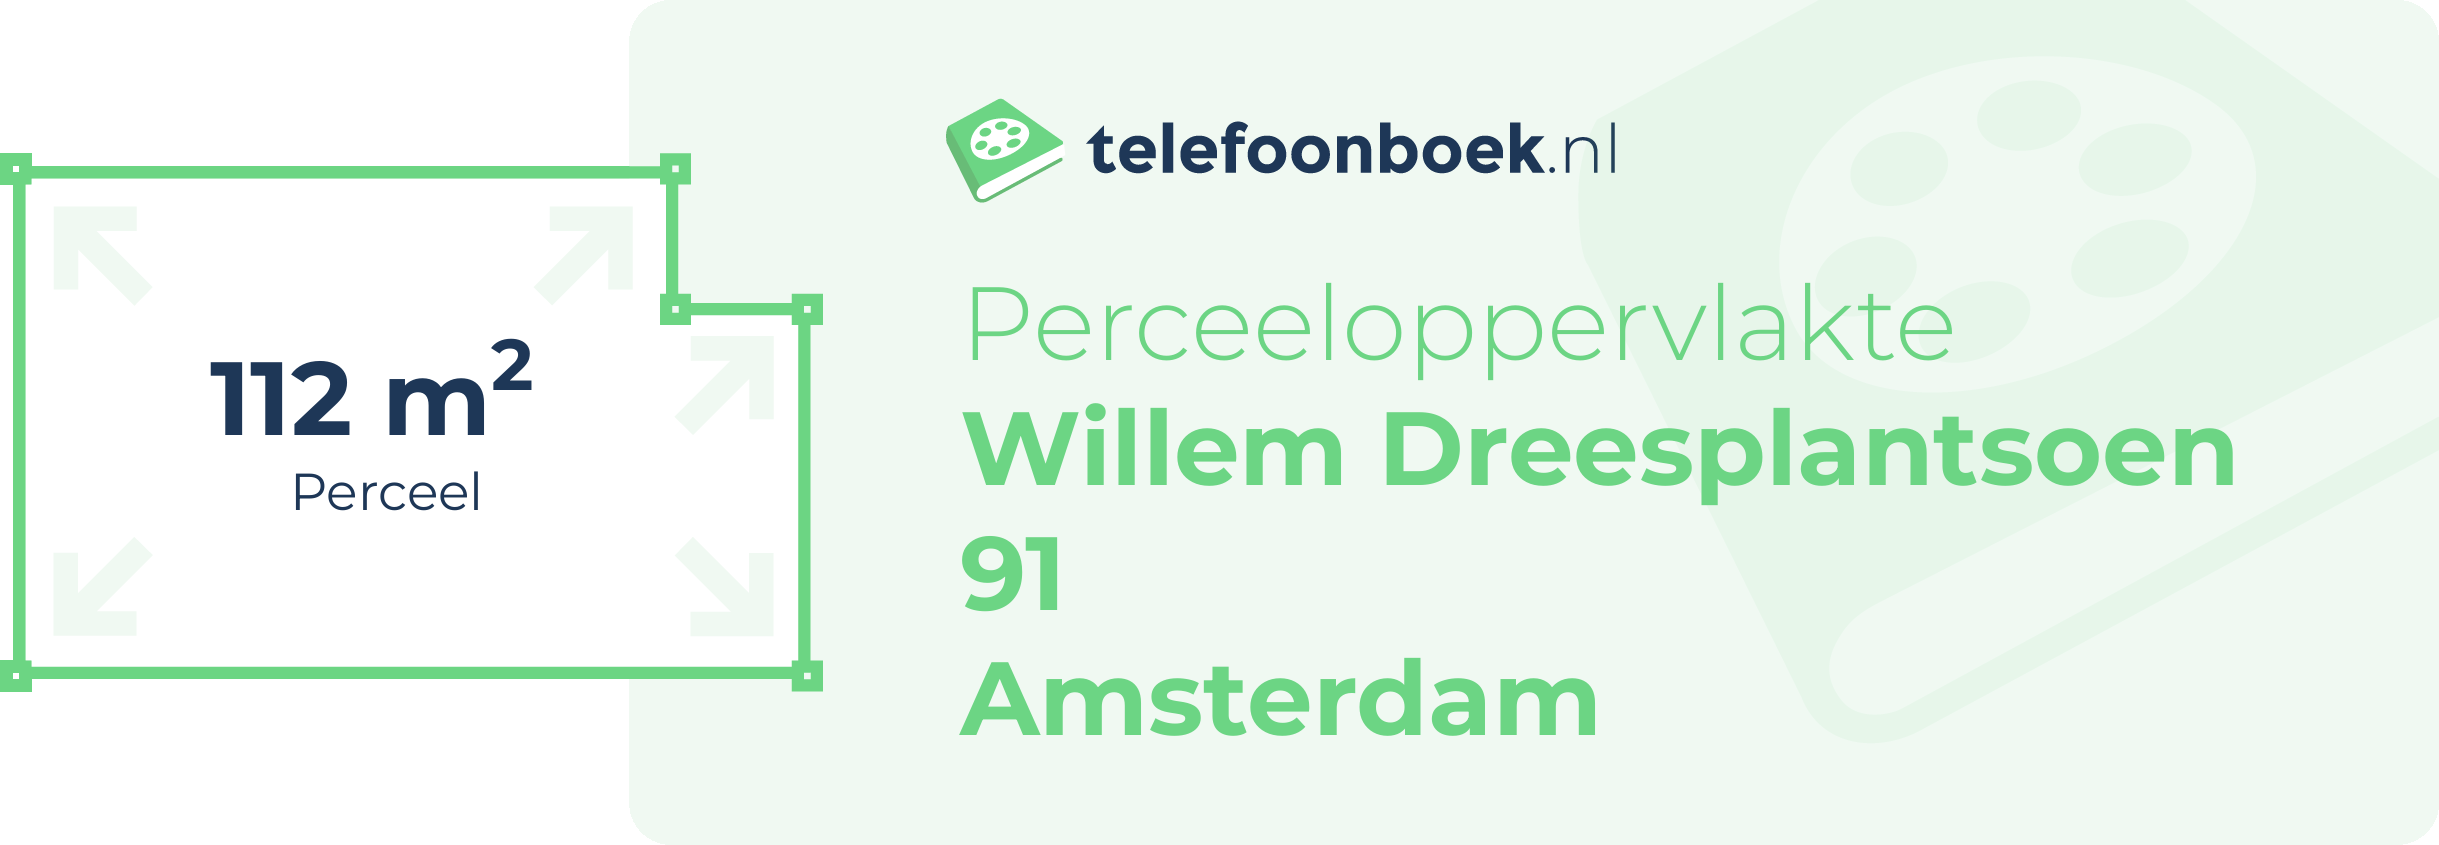 Perceeloppervlakte Willem Dreesplantsoen 91 Amsterdam